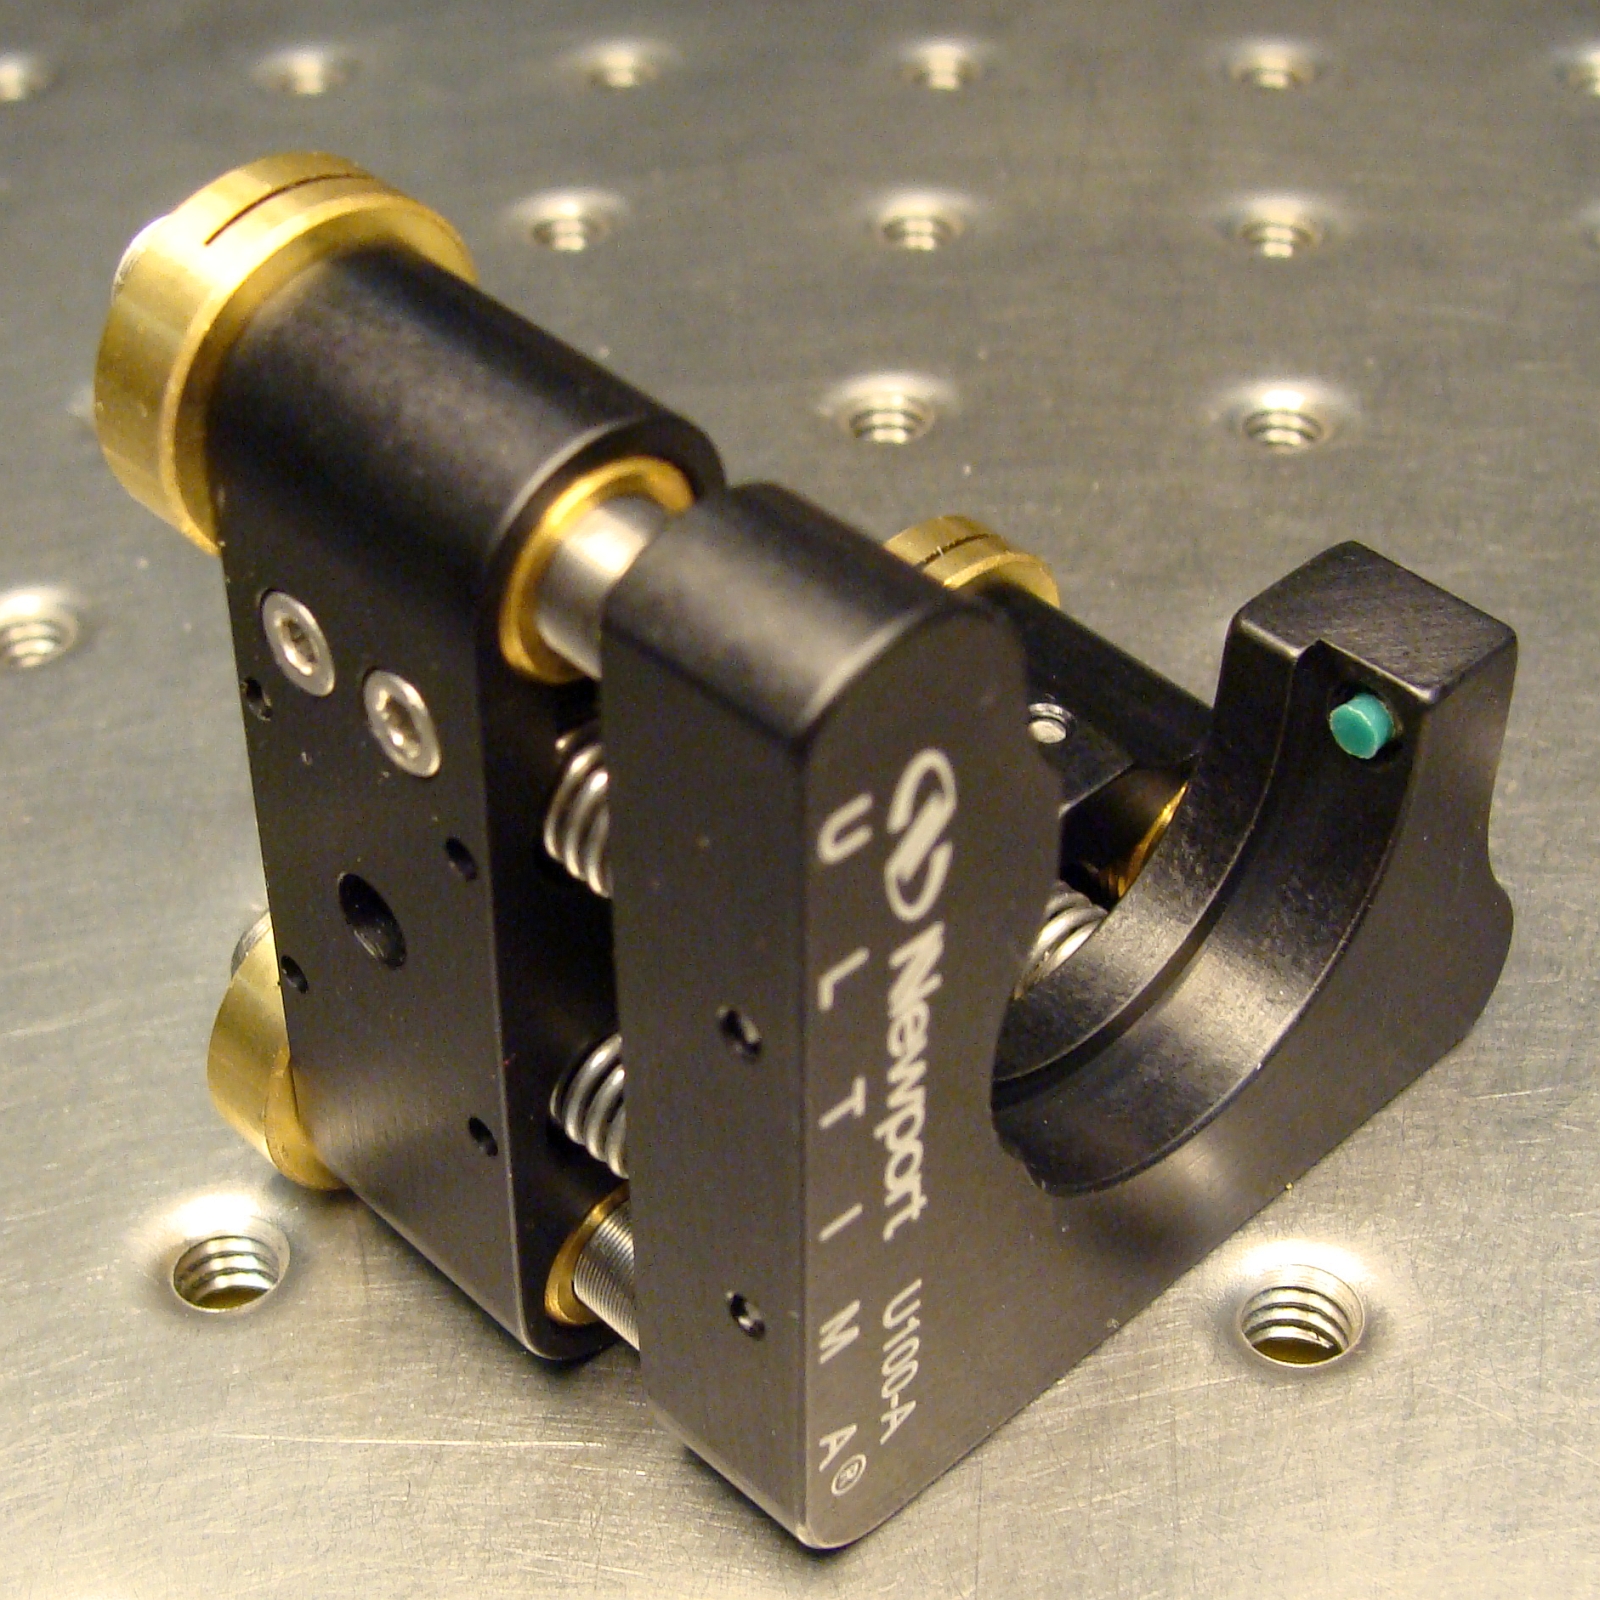 Newport Mm2-1a 1" Kinematic Lens Mount With Bonus Mirror Laser HeNe Turning Etc for sale online 